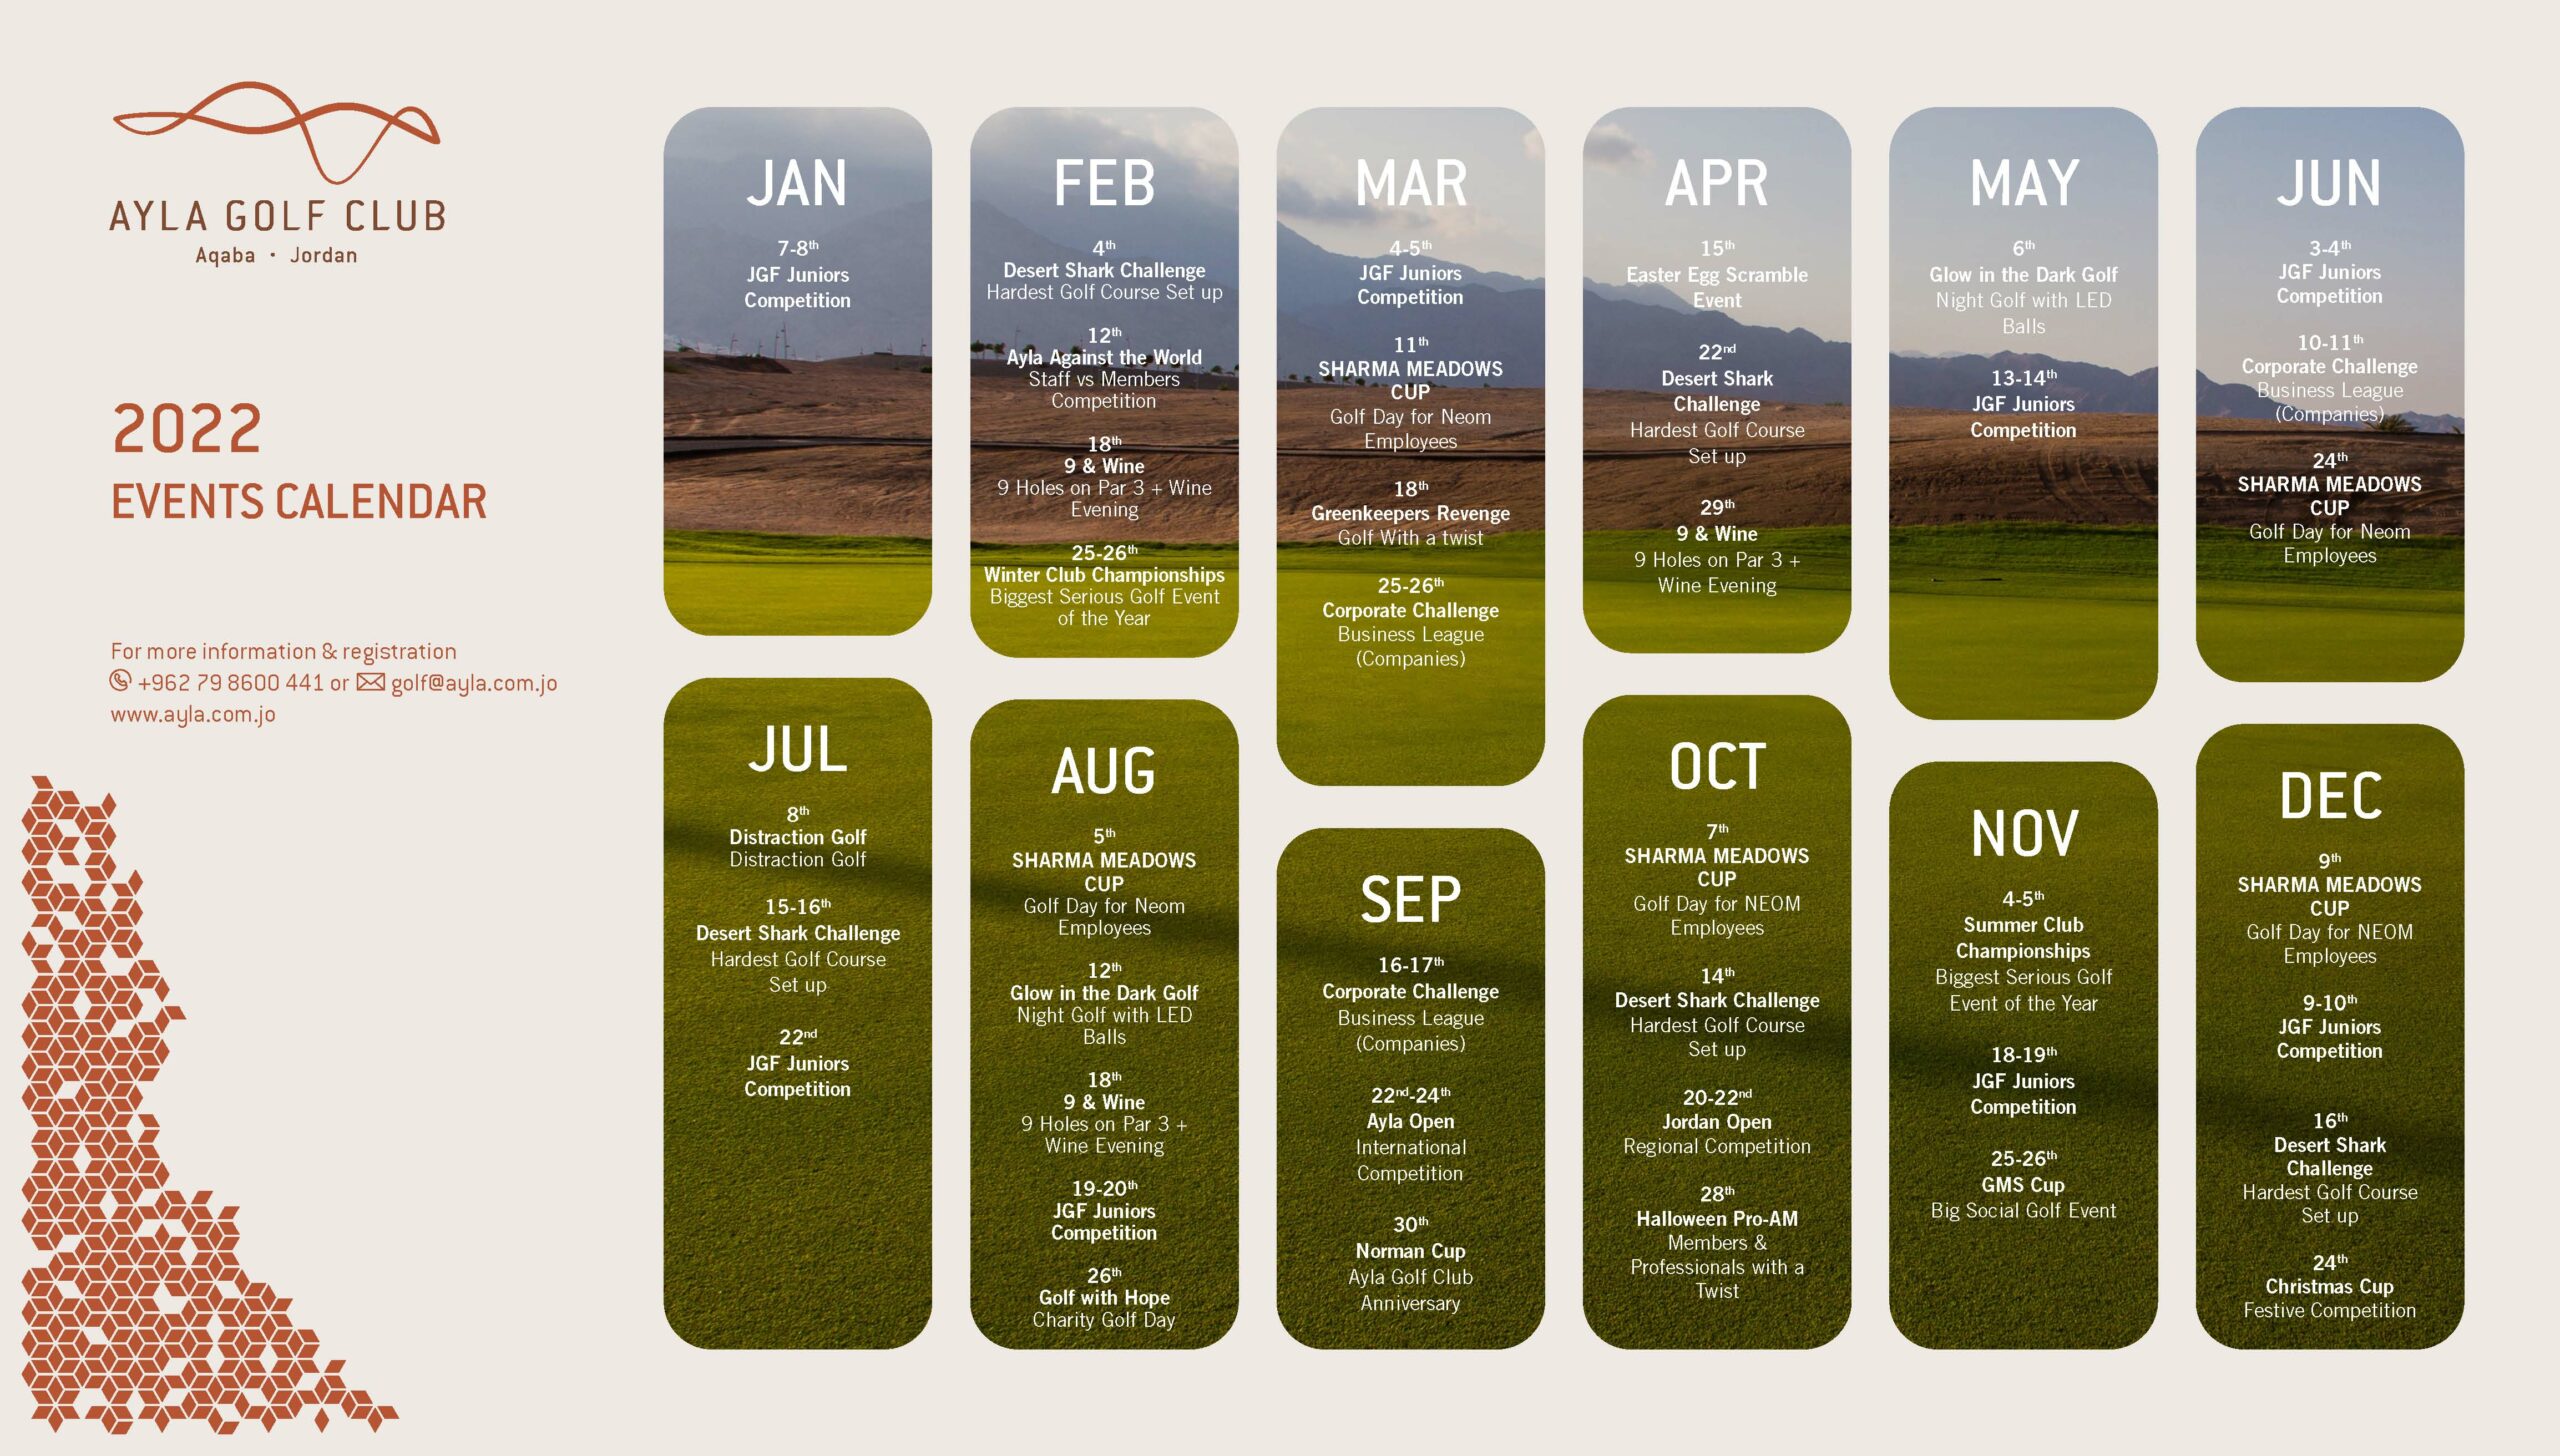 Ayla Golf Club 2022 Events Calendar